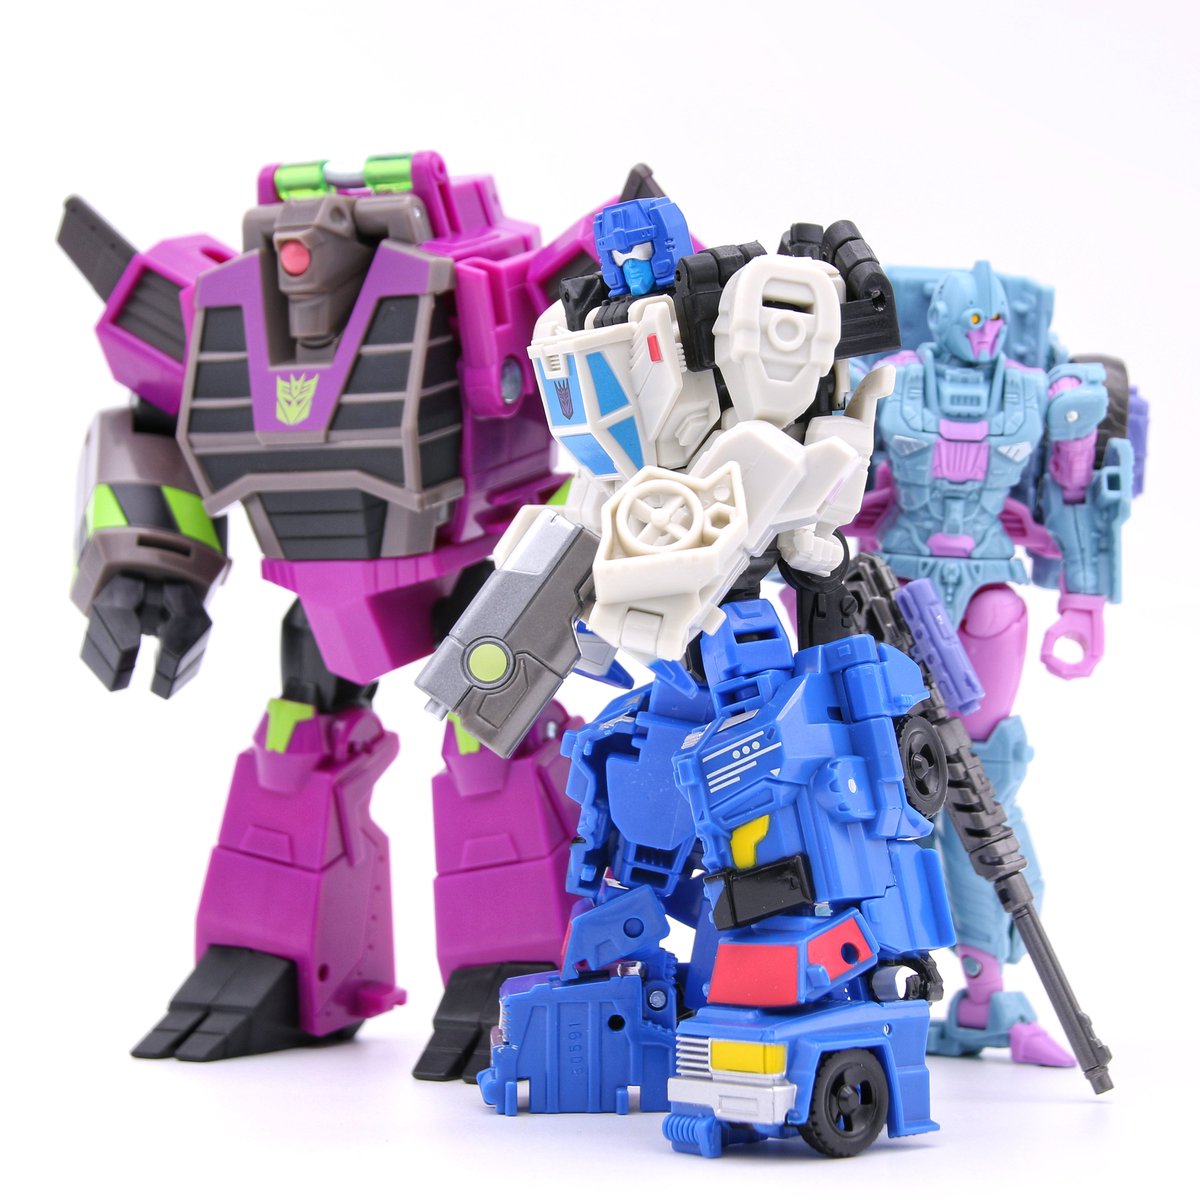 Battletrap, Clobber and Kaskade!

#transformers #toyphotography